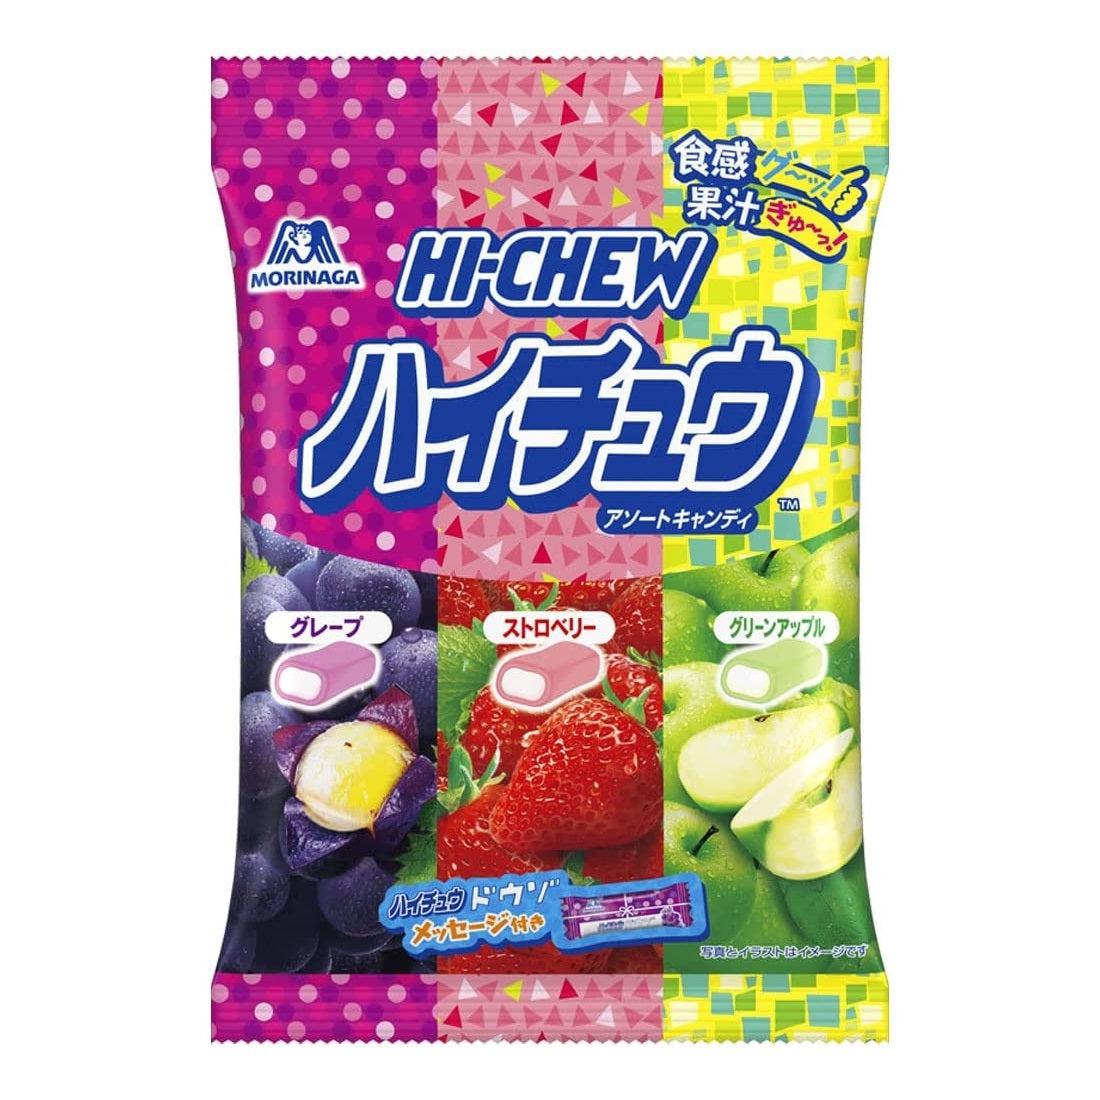 Hi-CHEW Assorted Fruit Flavors JAPAN (10 Count)